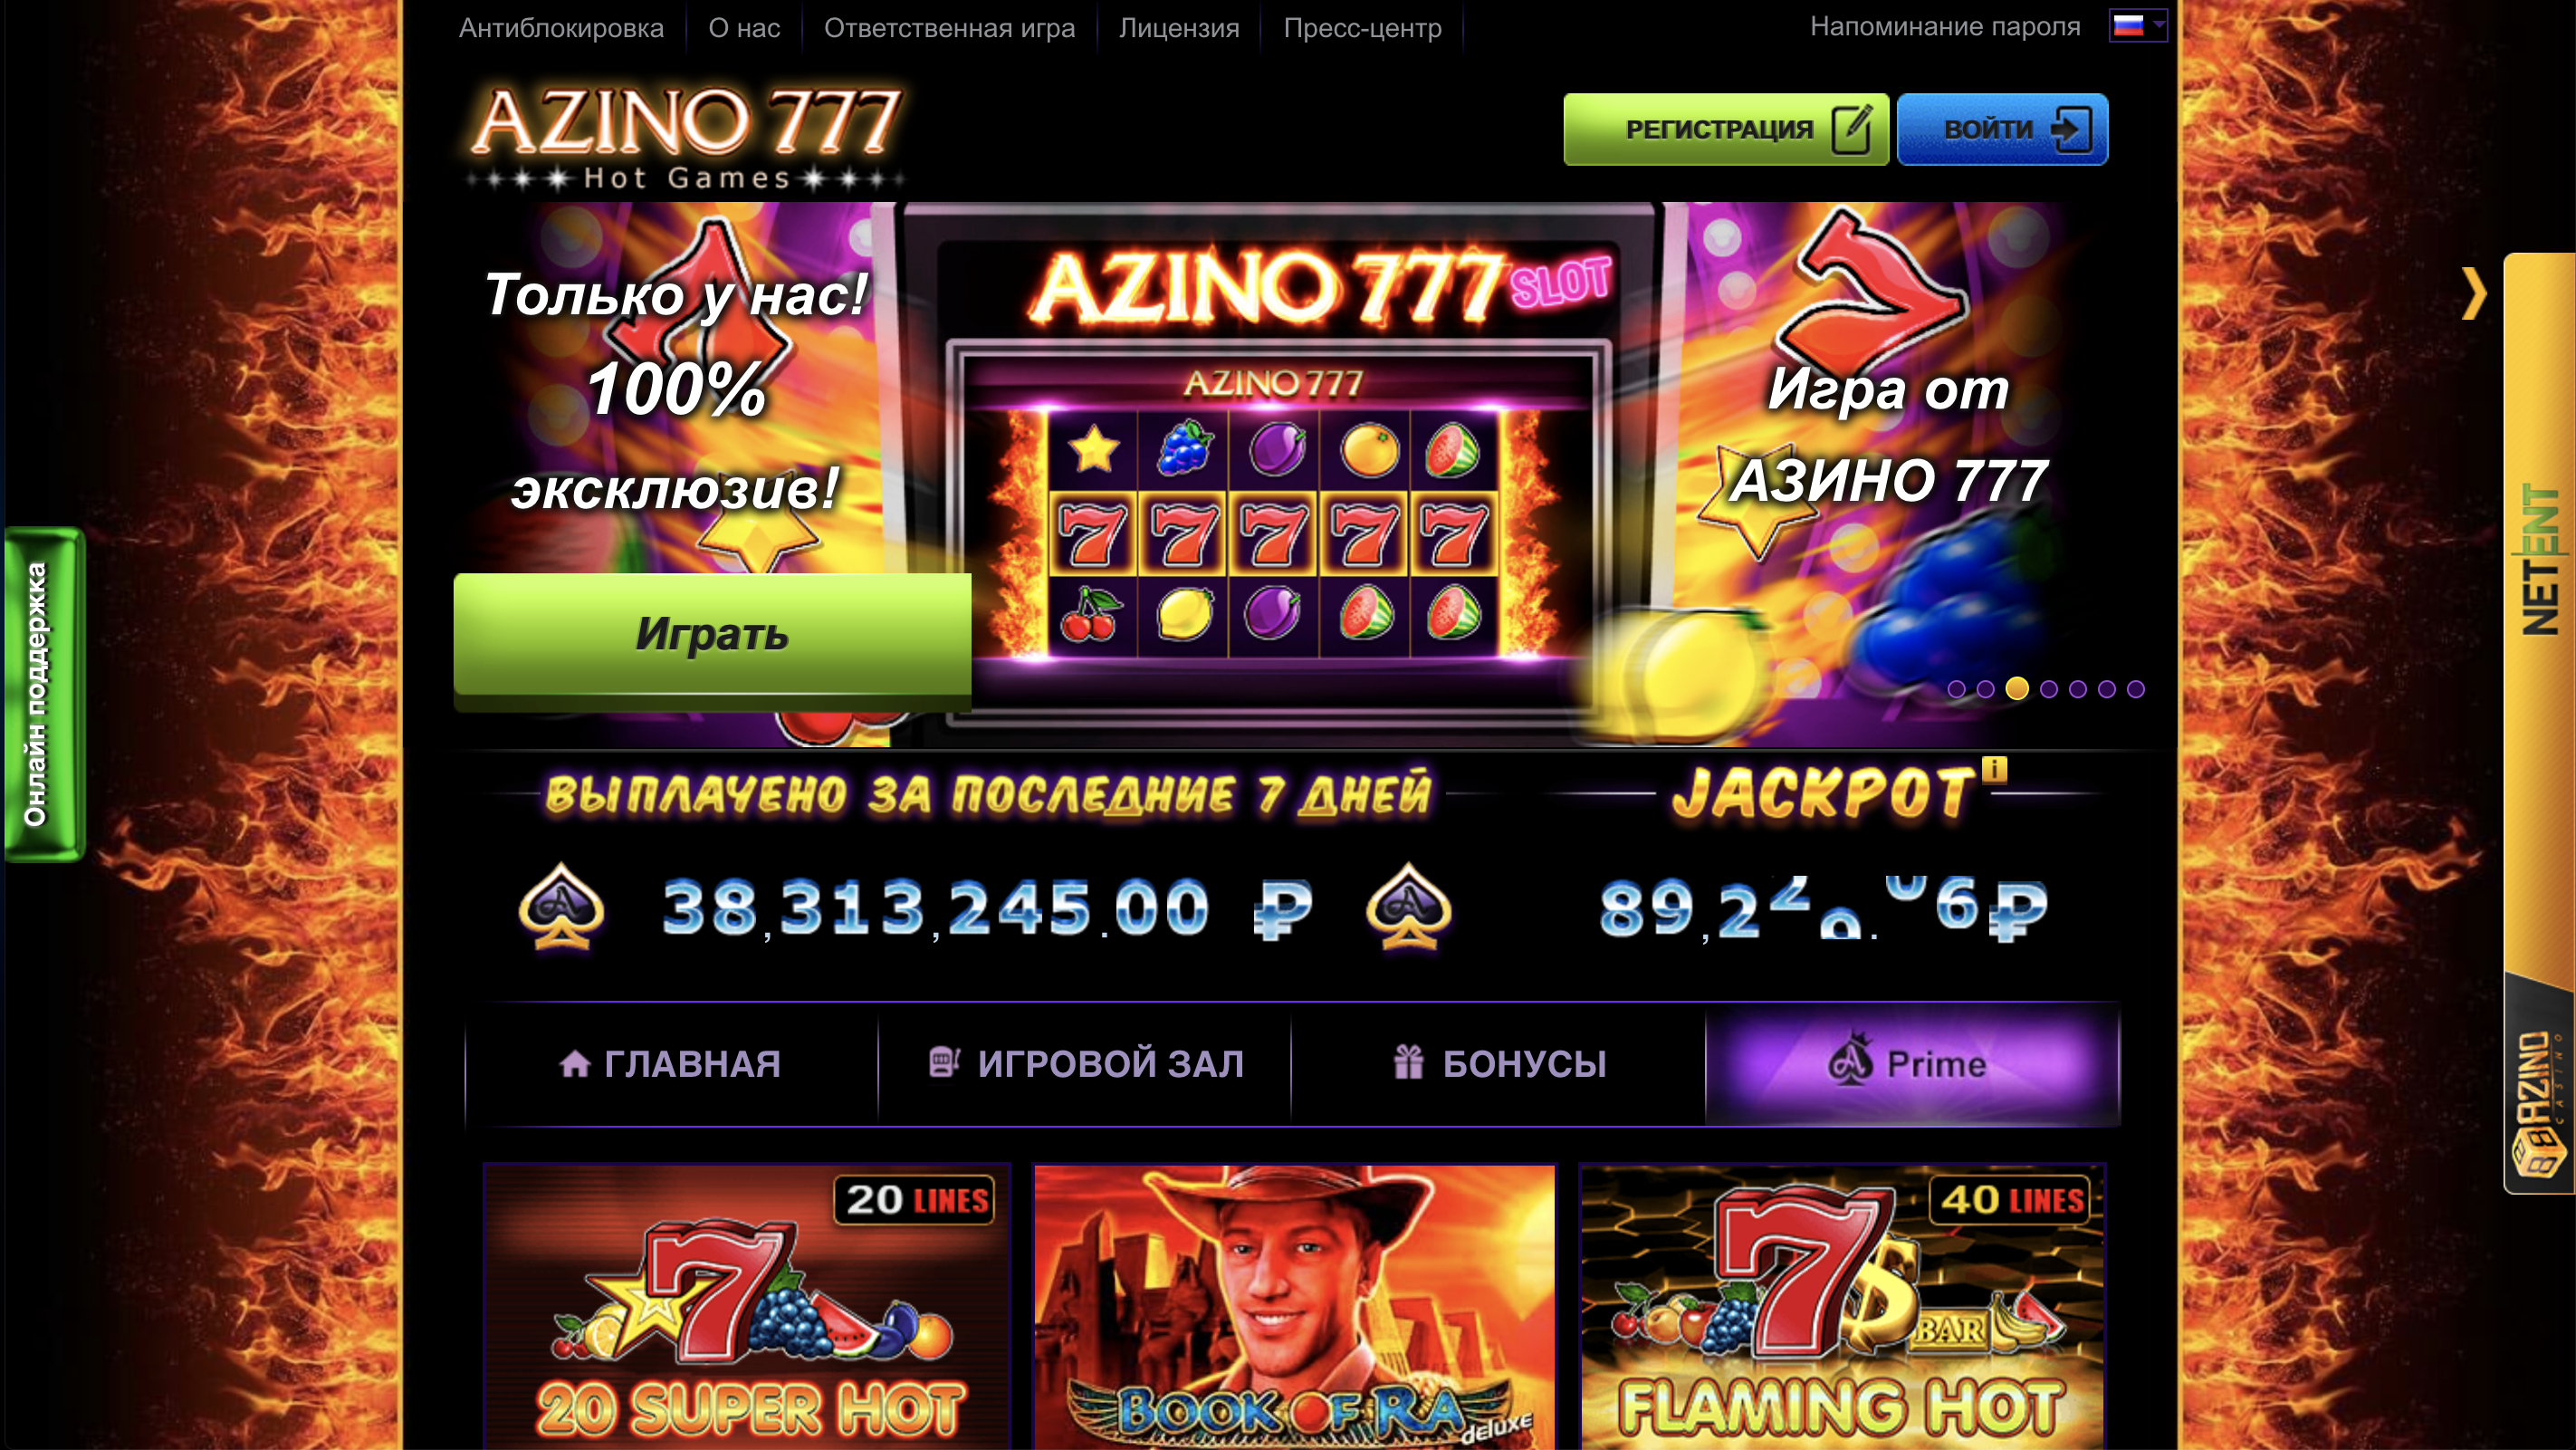 Azino777 play azino777 download pw. Казино азино777 бездепозитный бонус. Азино777 казино зеркало. Казино три топора 777.